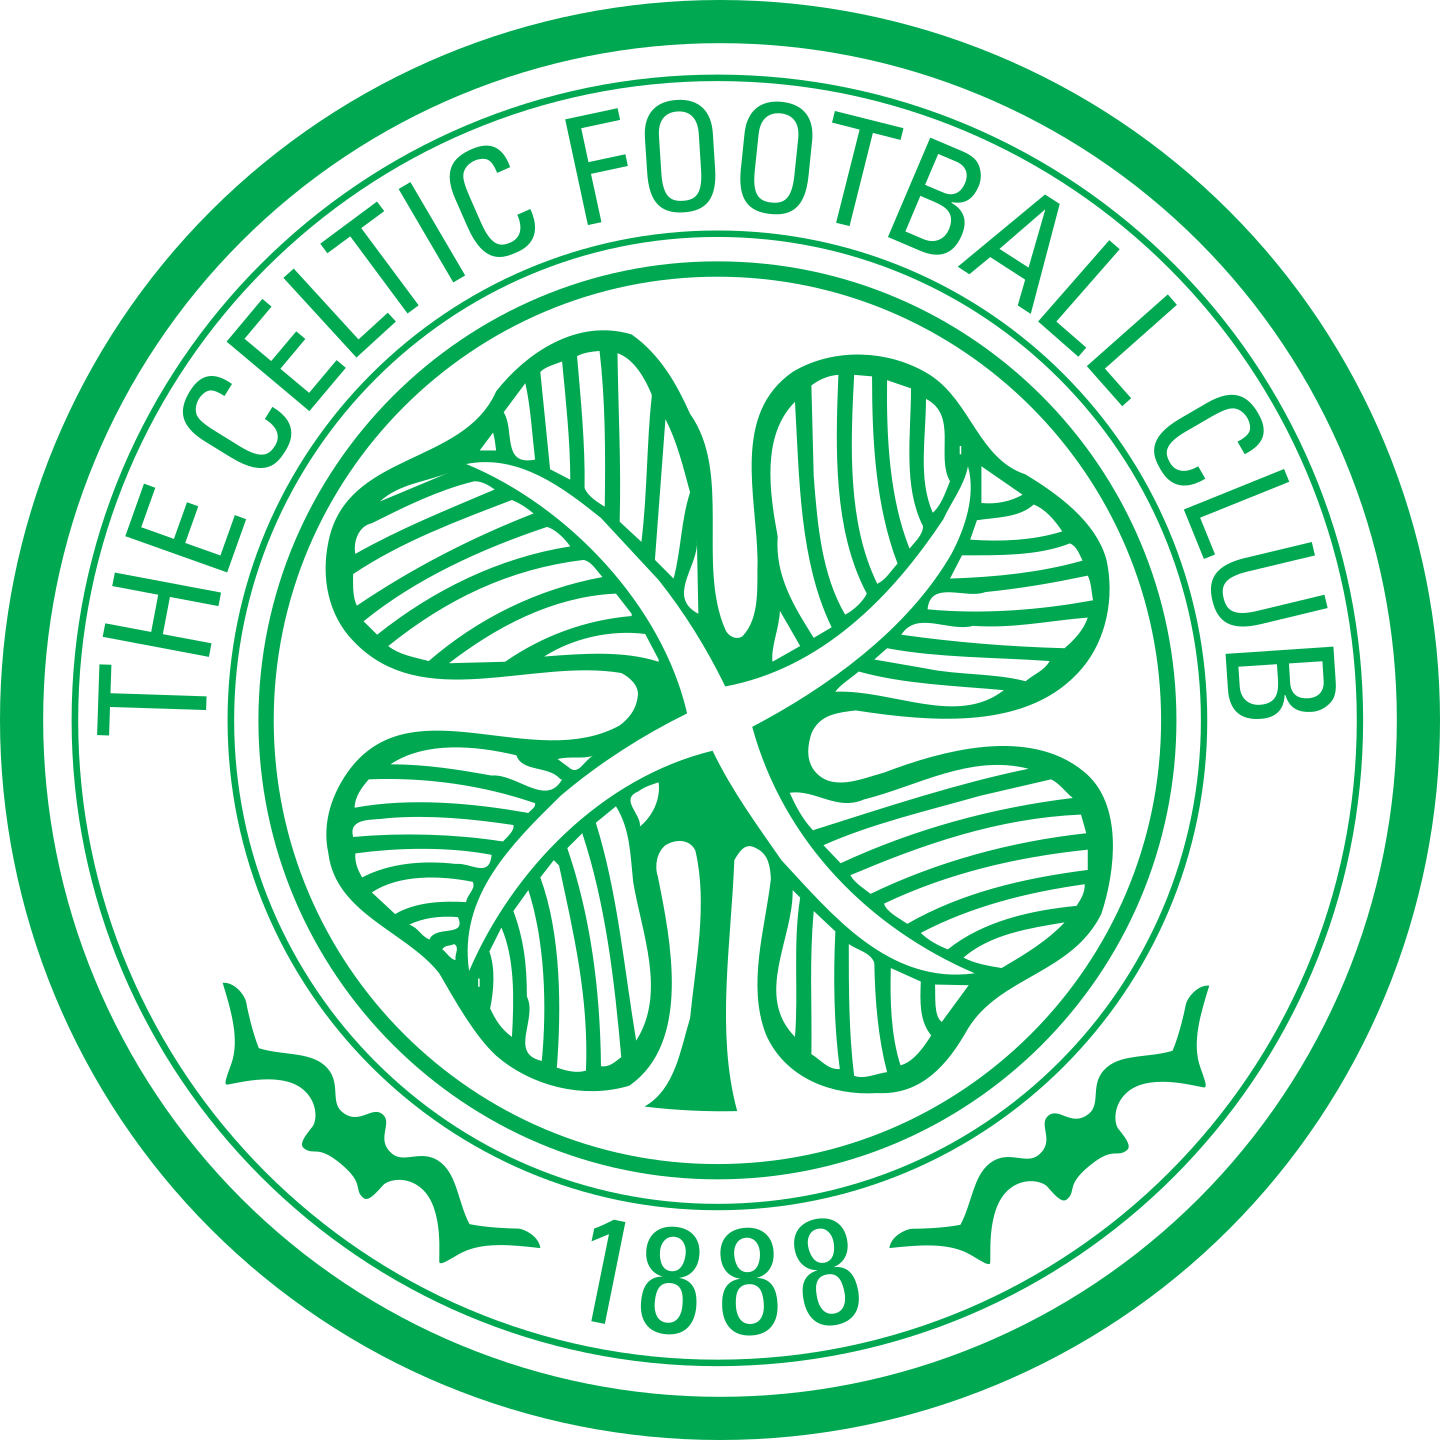 celtic fc logo 2 - Celtic FC Logo